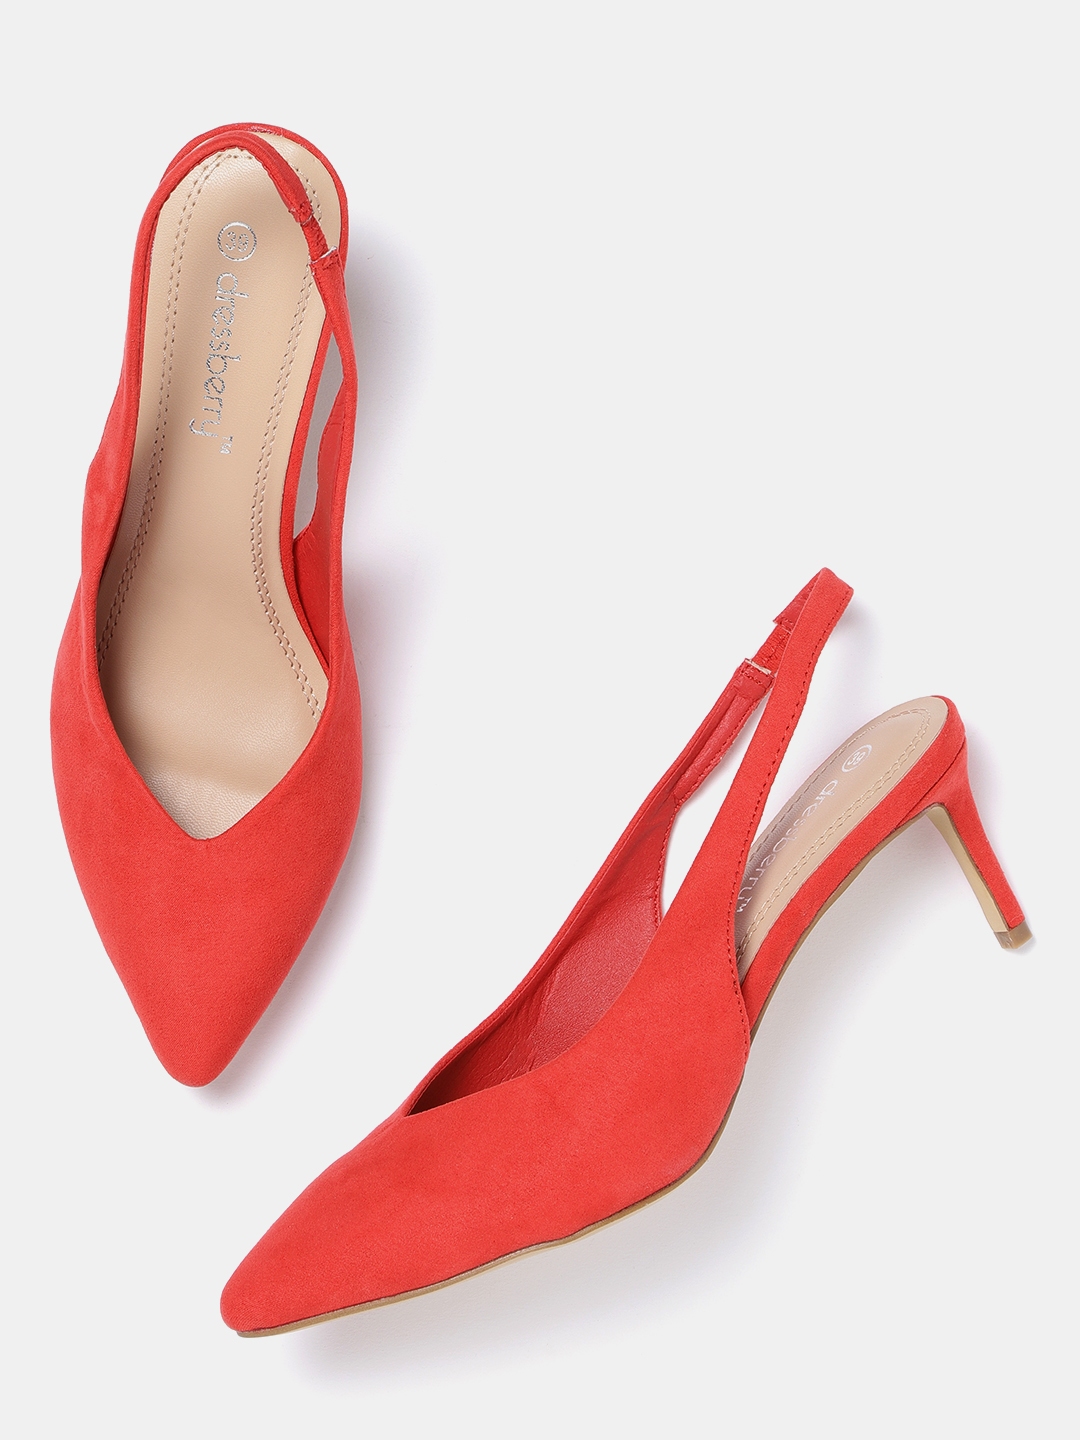 coral red heels